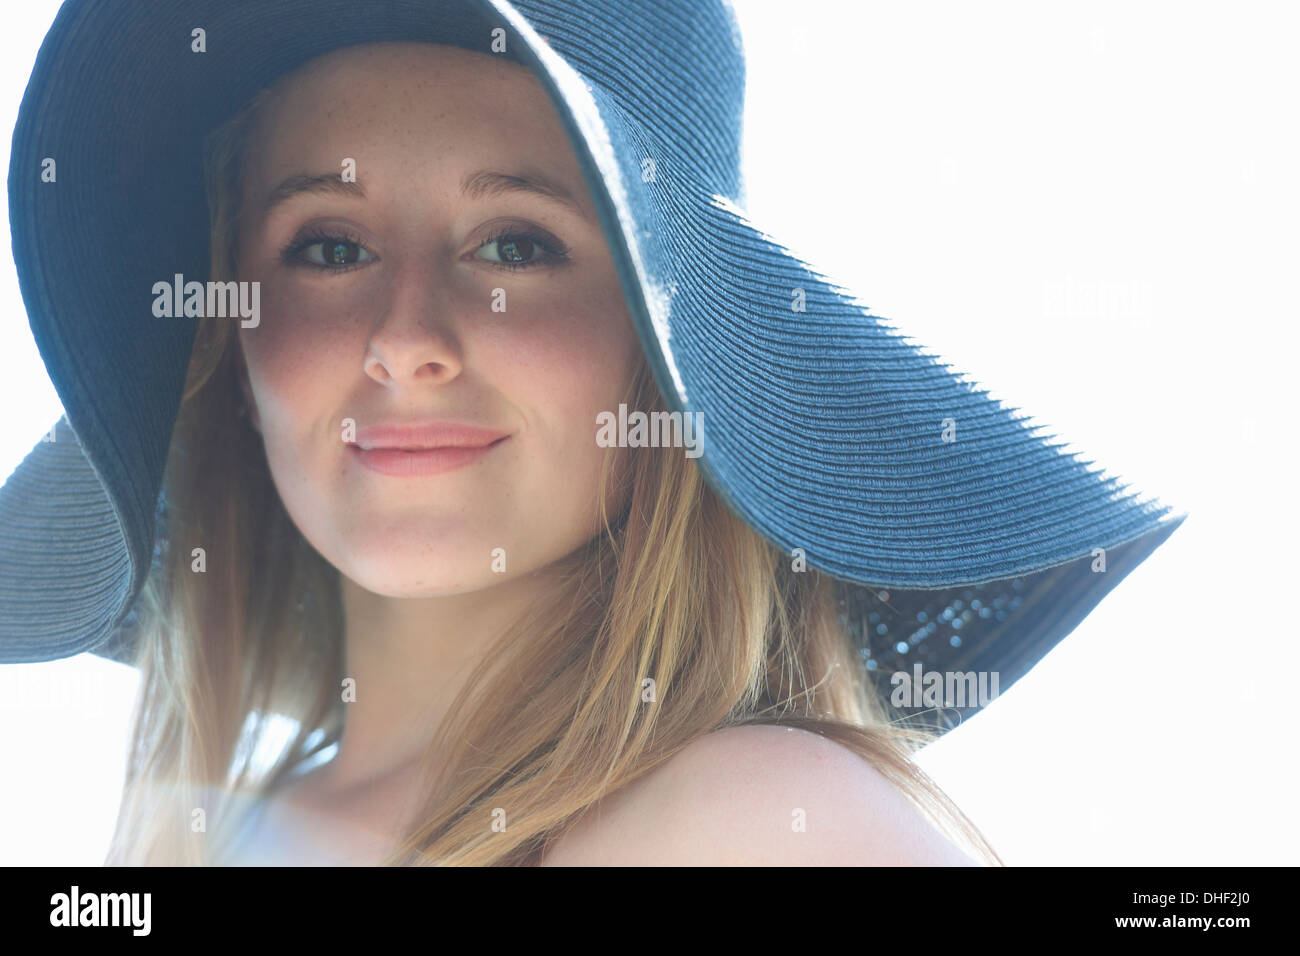 Portrait of teenage girl wearing blue sunhat Stock Photo